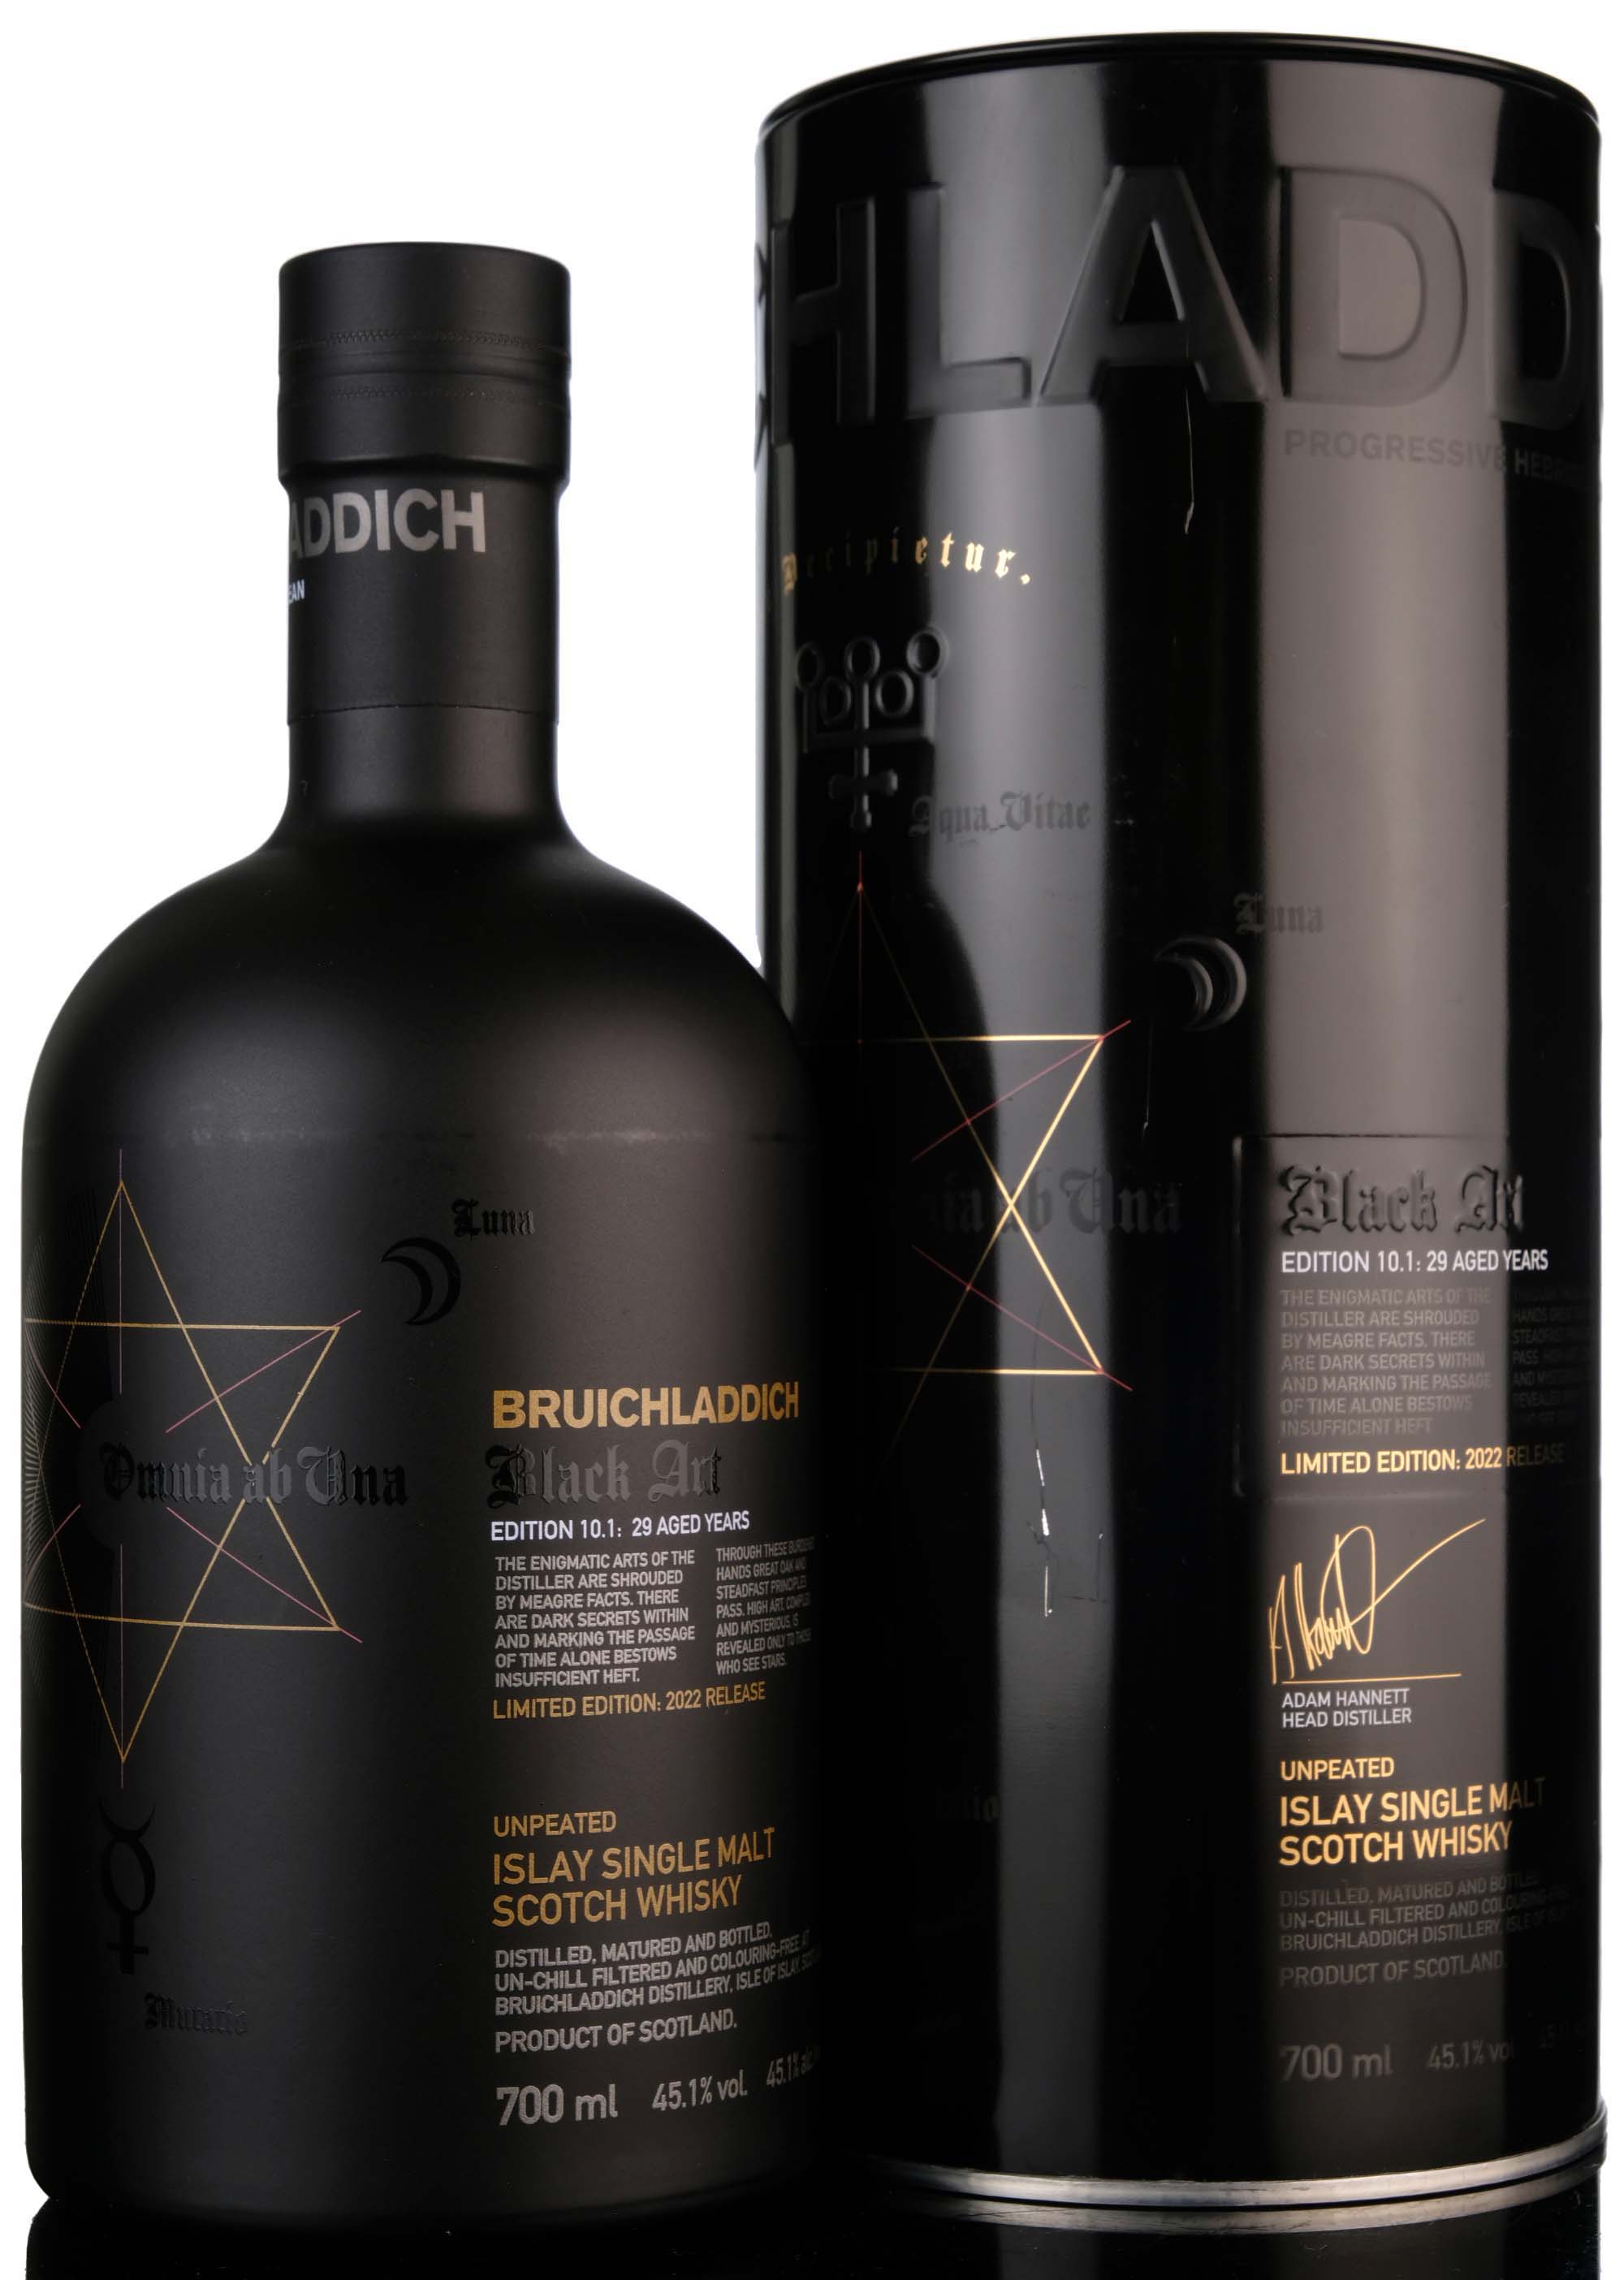 Bruichladdich 21 Year Old - Black Art Edition 10.1 - 2022 Release